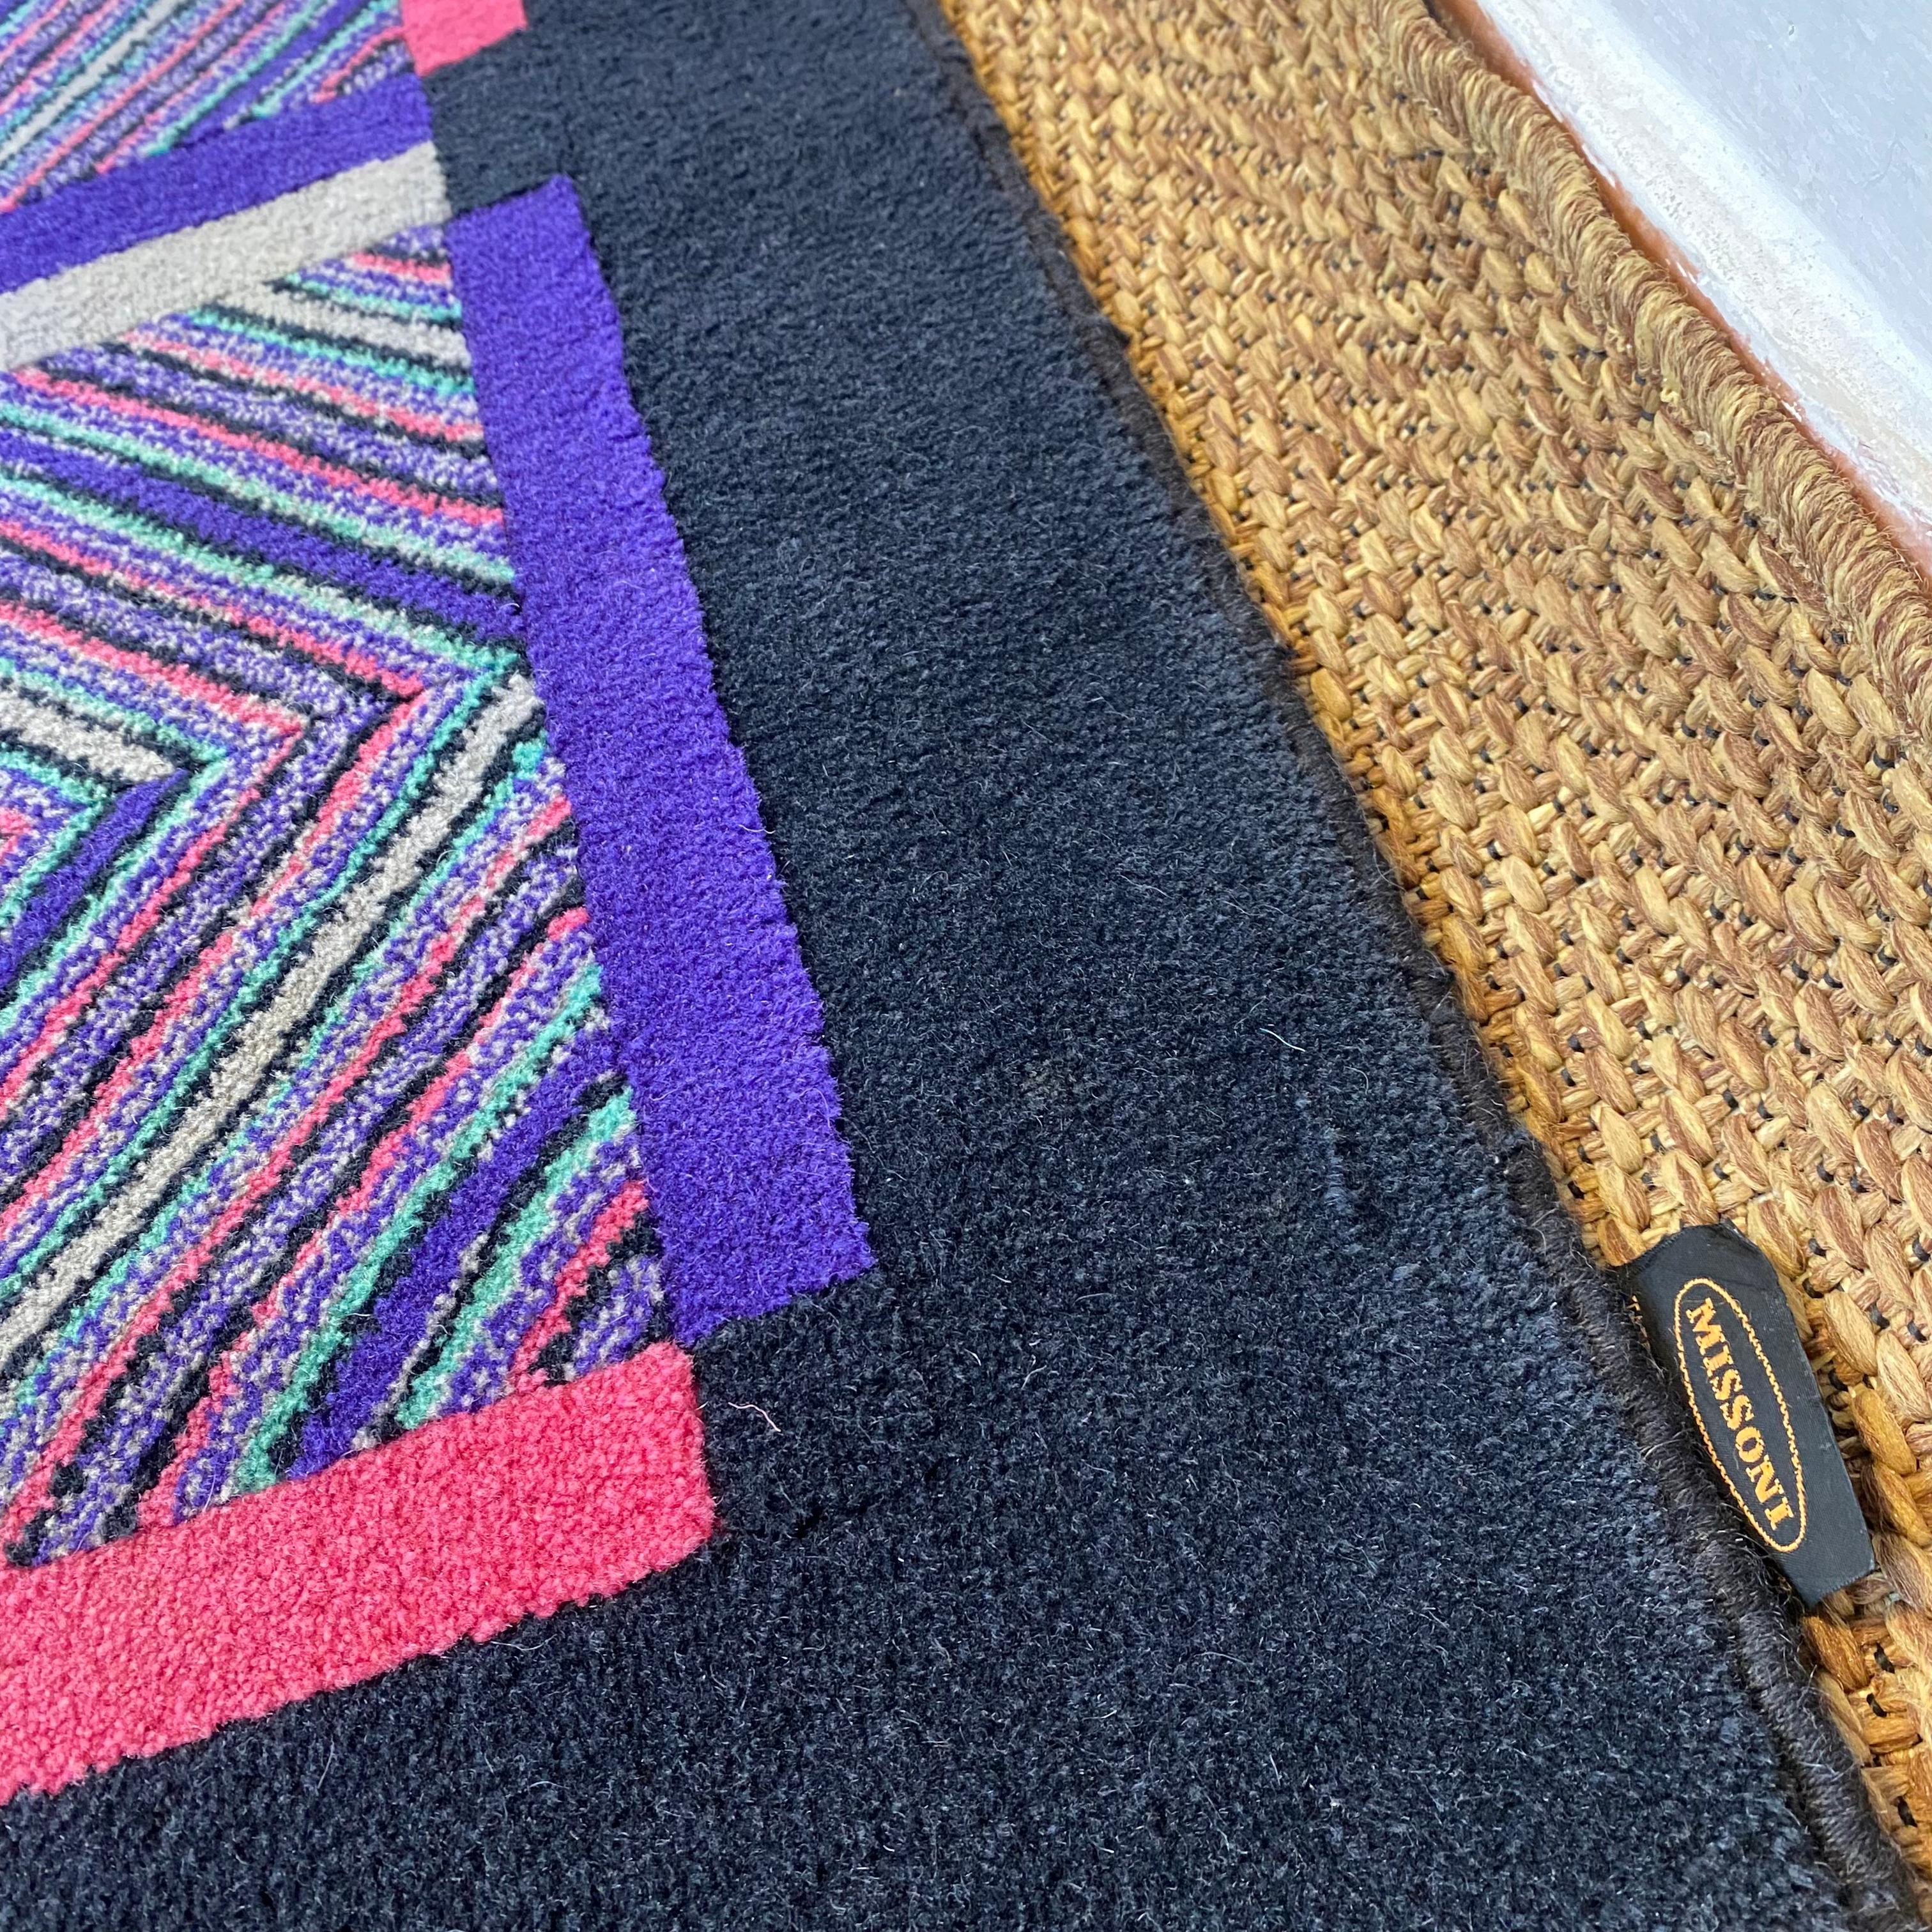 Ottavio Missoni's Geometrical Wool Carpet For Sale 2